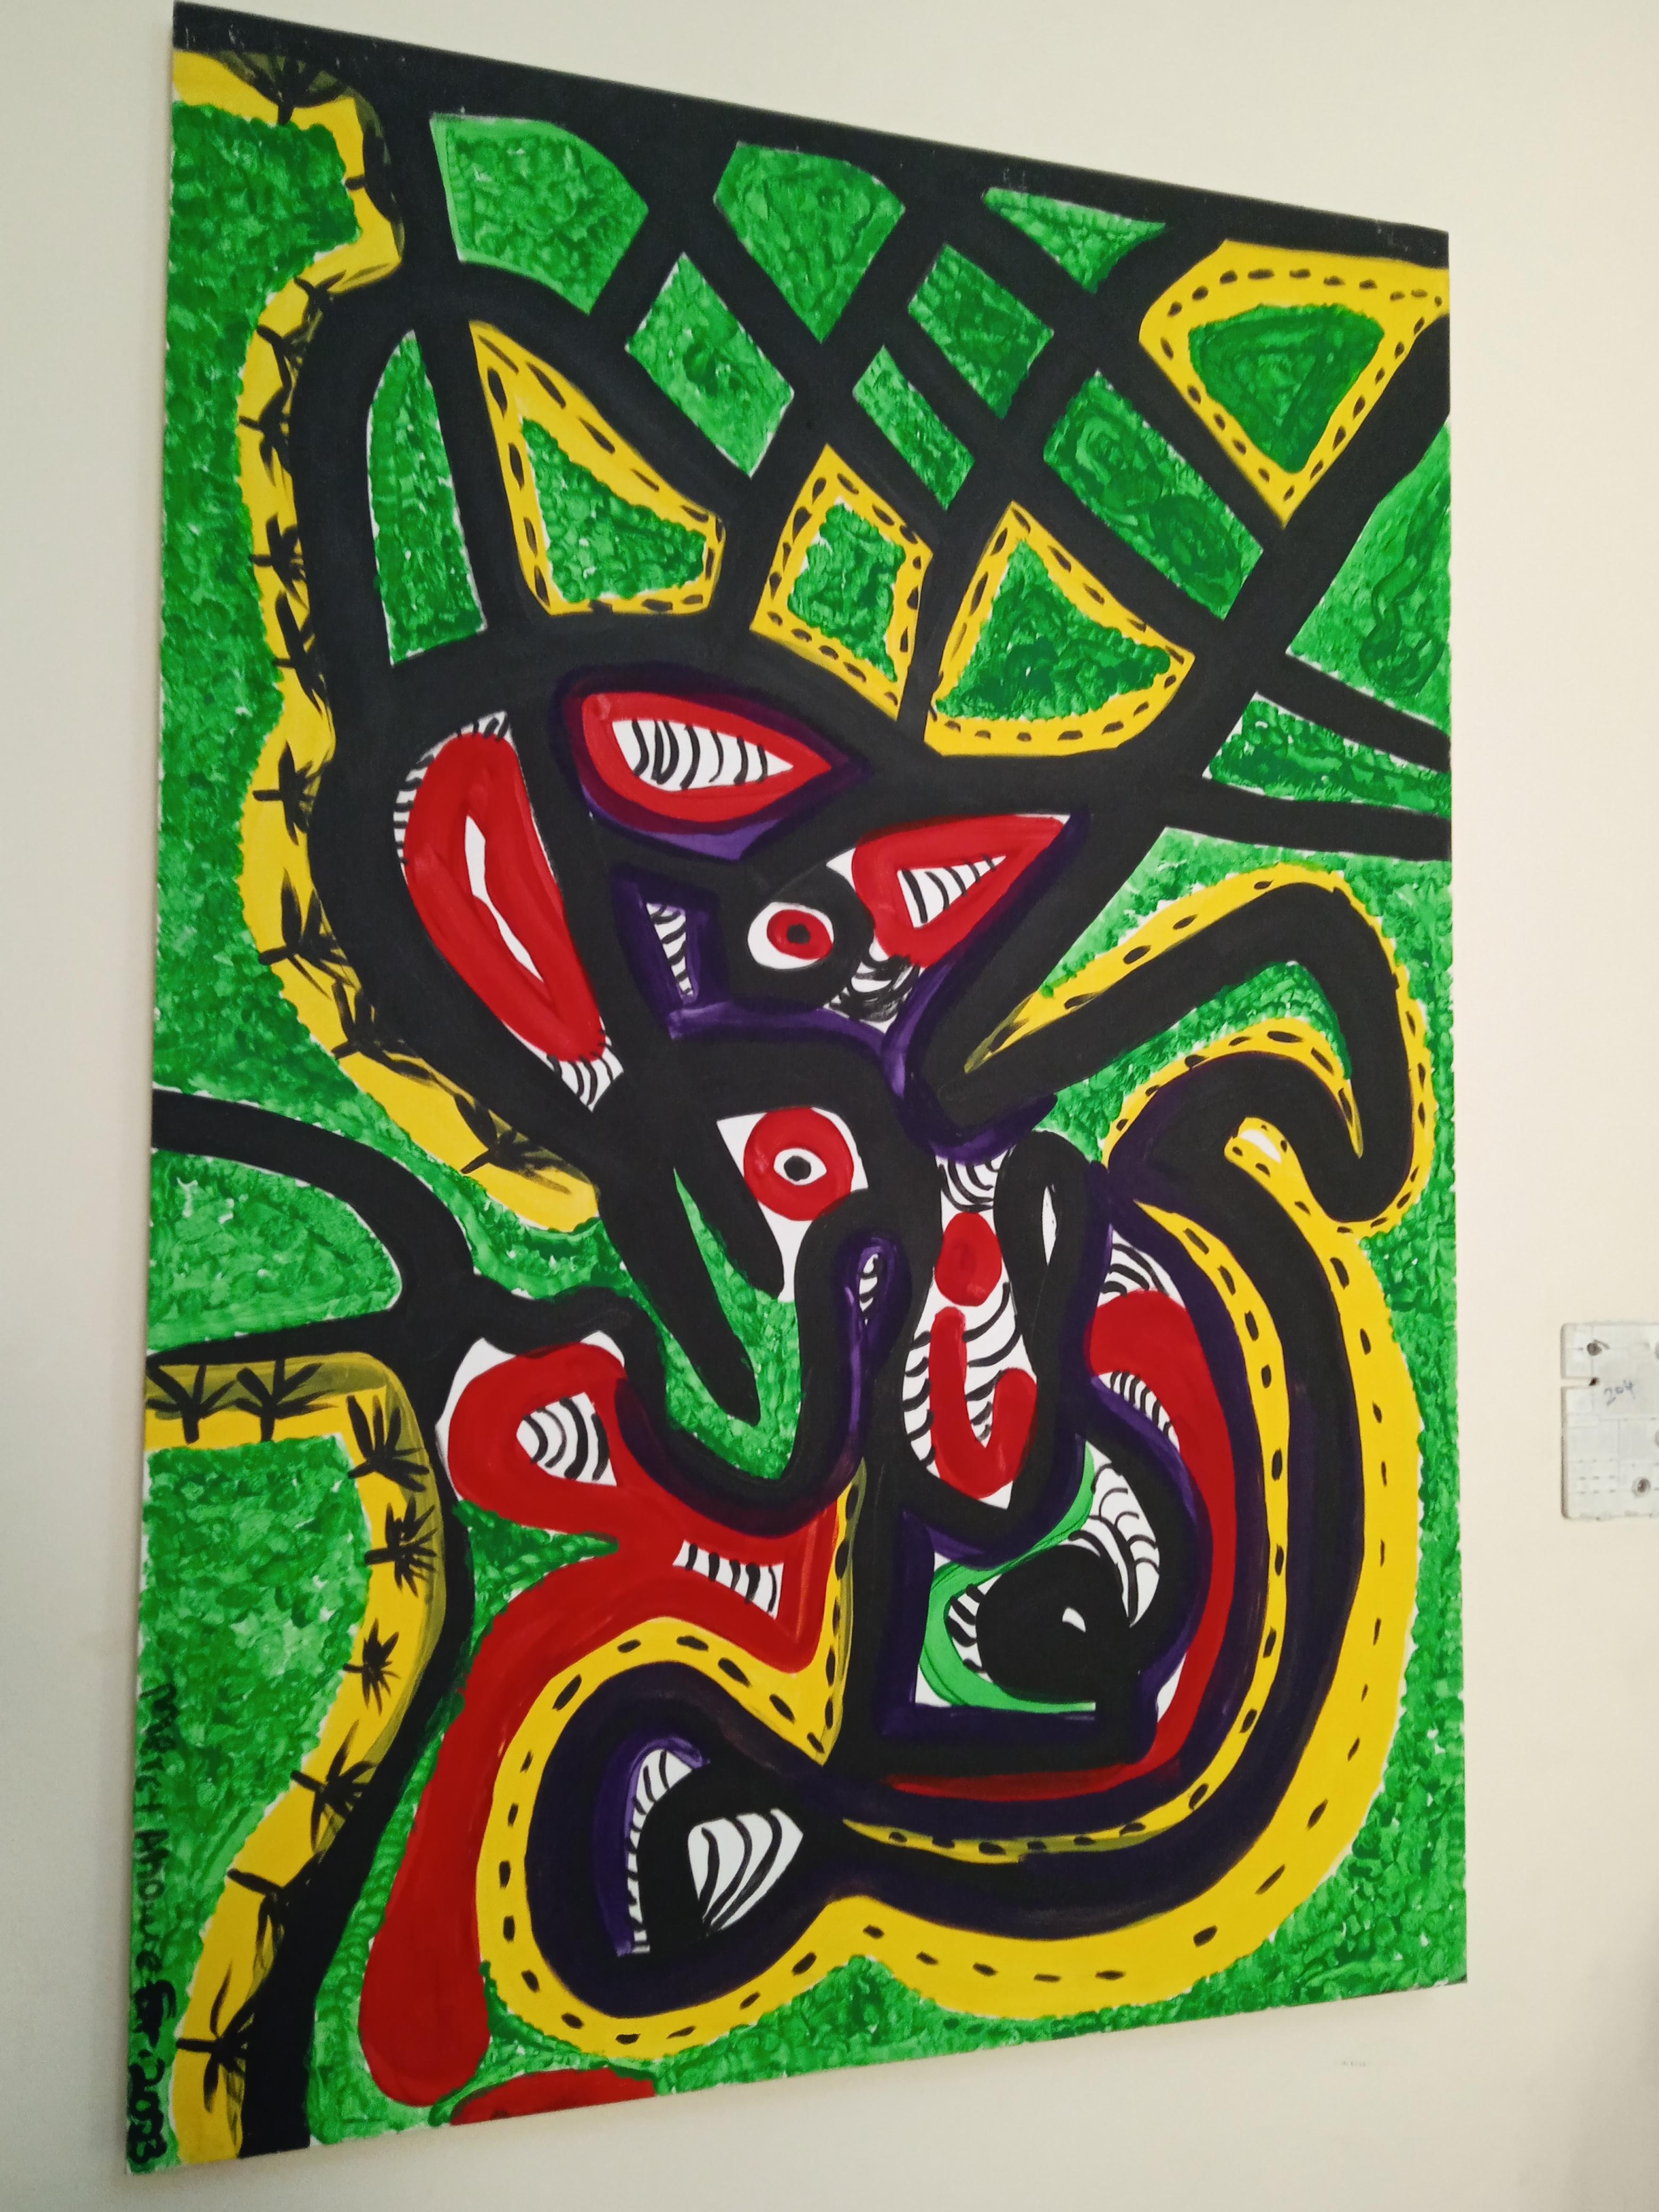 Greene & Greene  - Expressionnisme abstrait Painting par Mercy akowe 